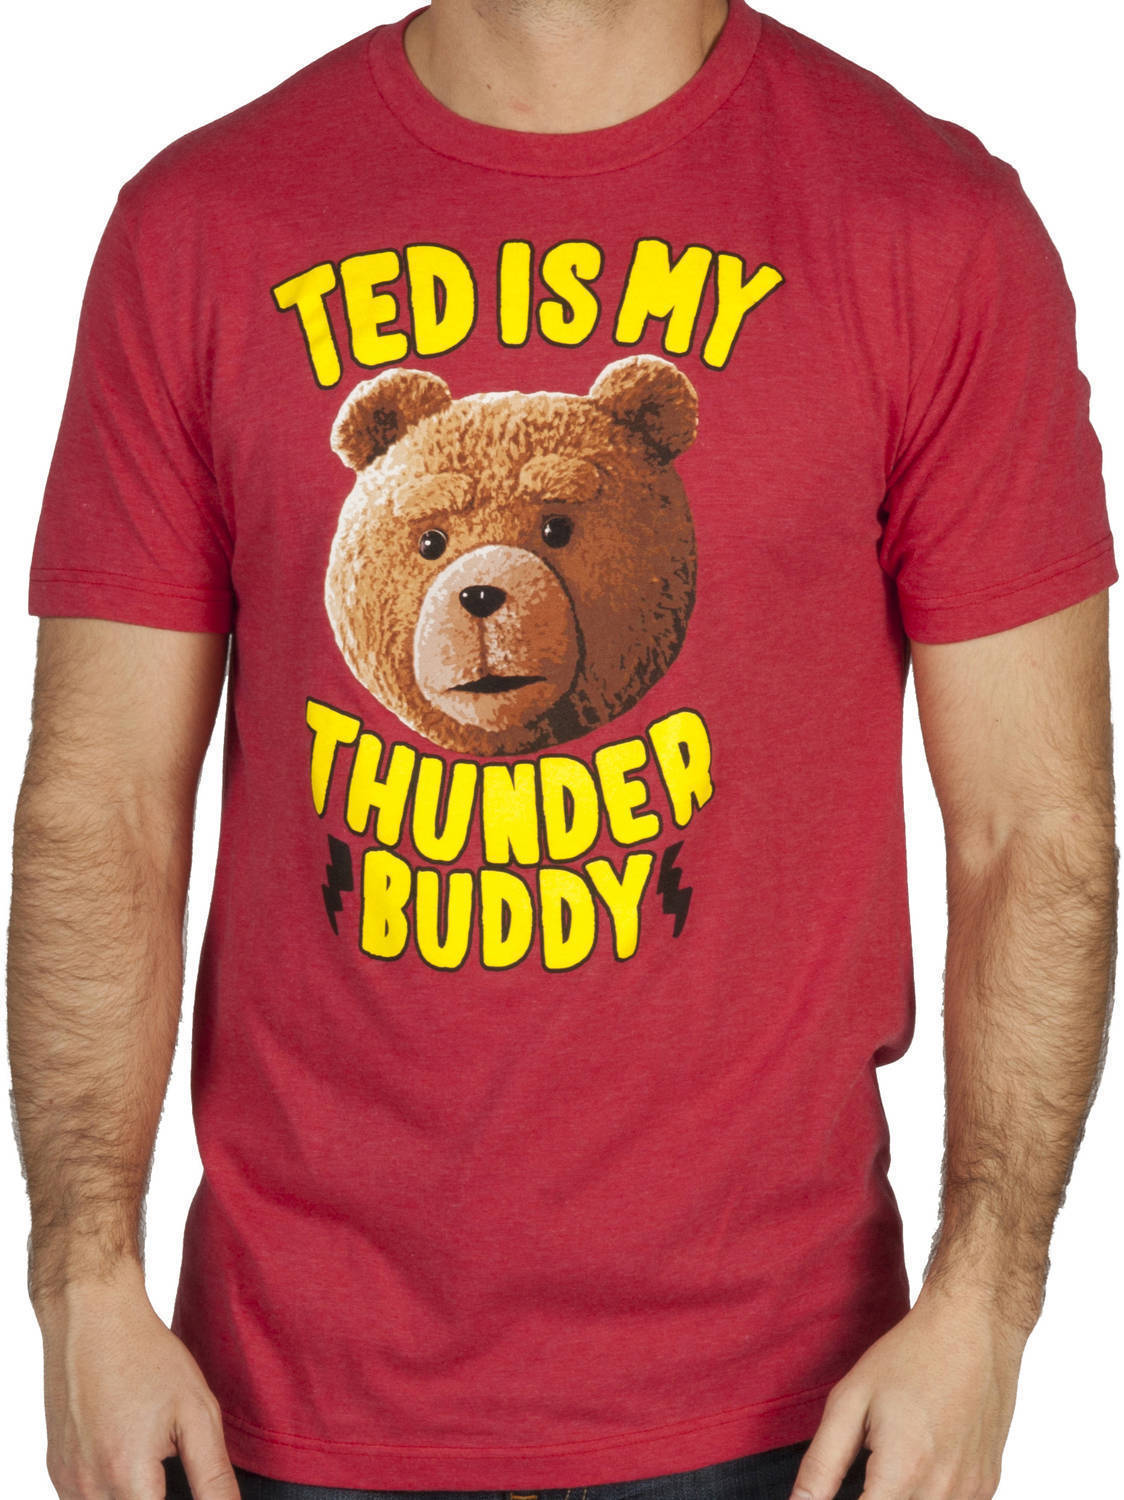 thunder buddy